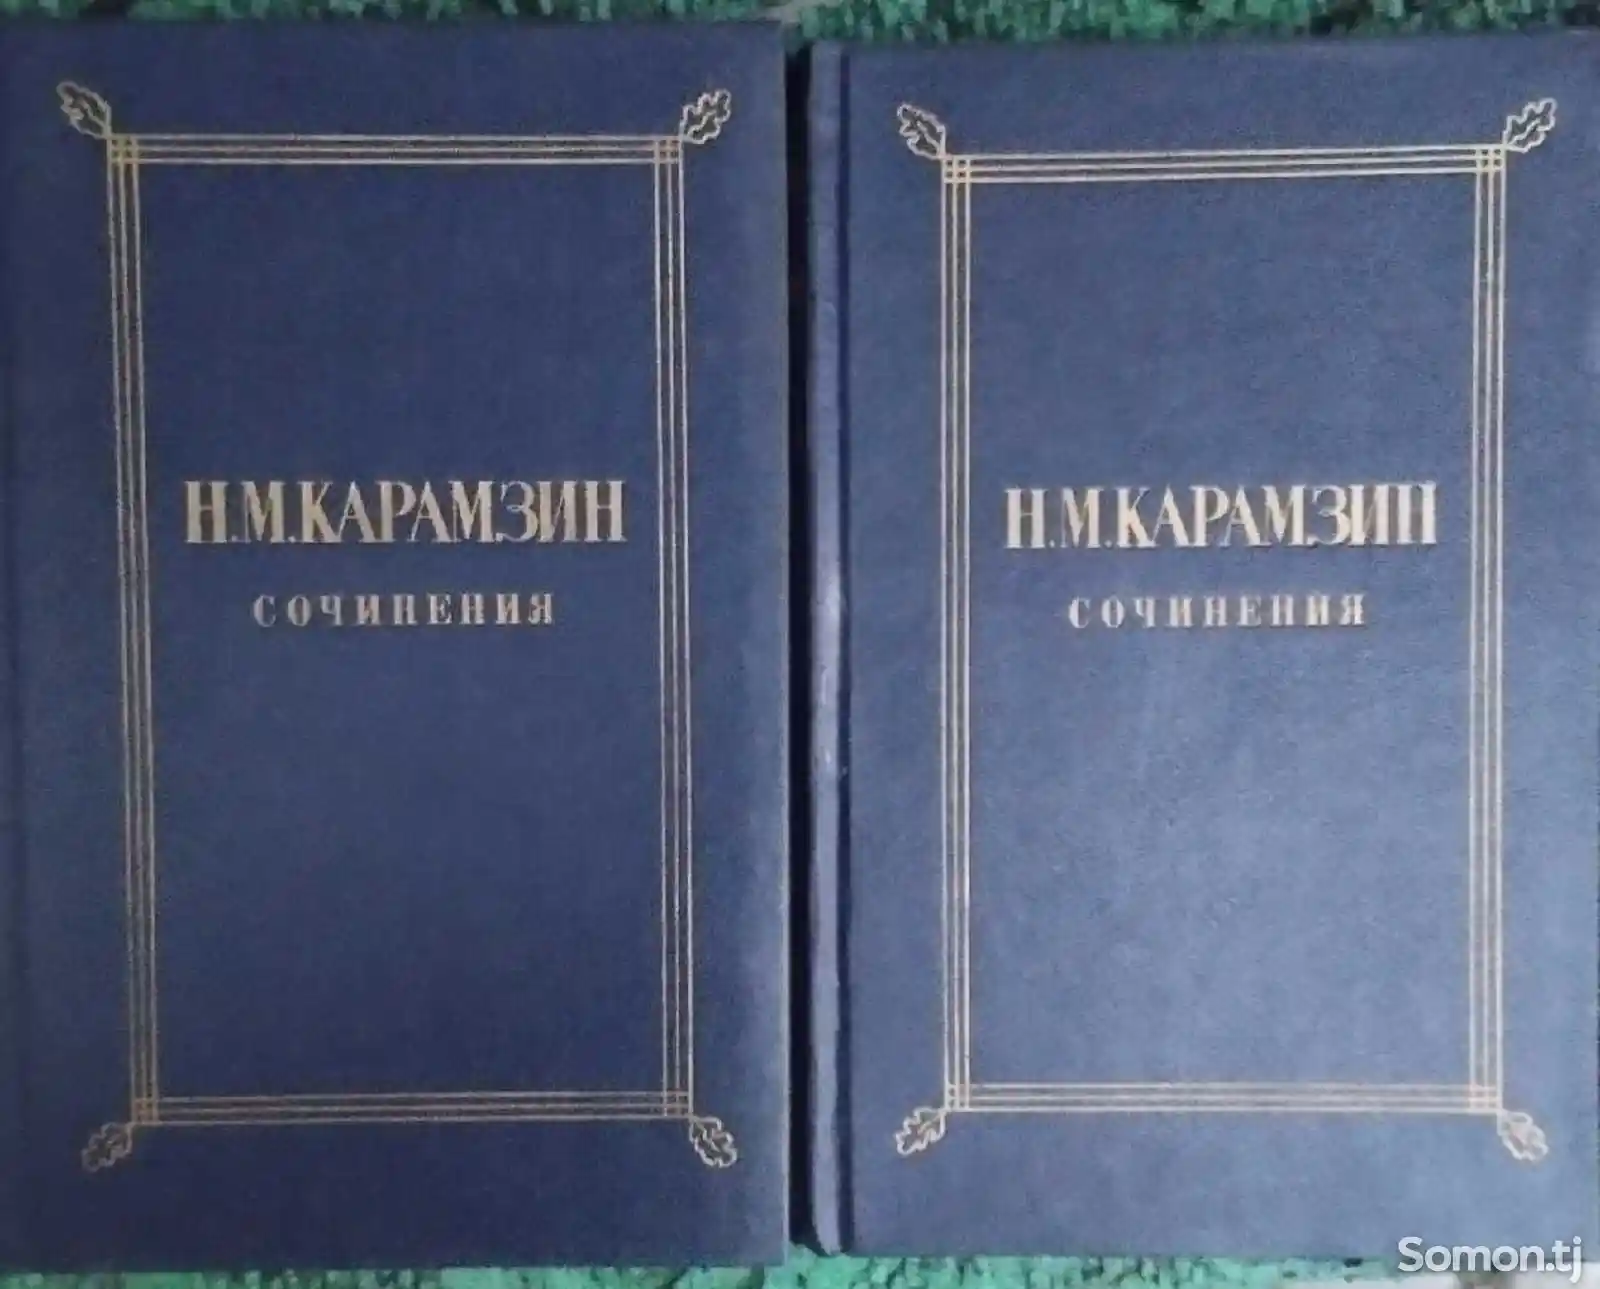 Сочинения Н. М. Карамзина в 2х томах